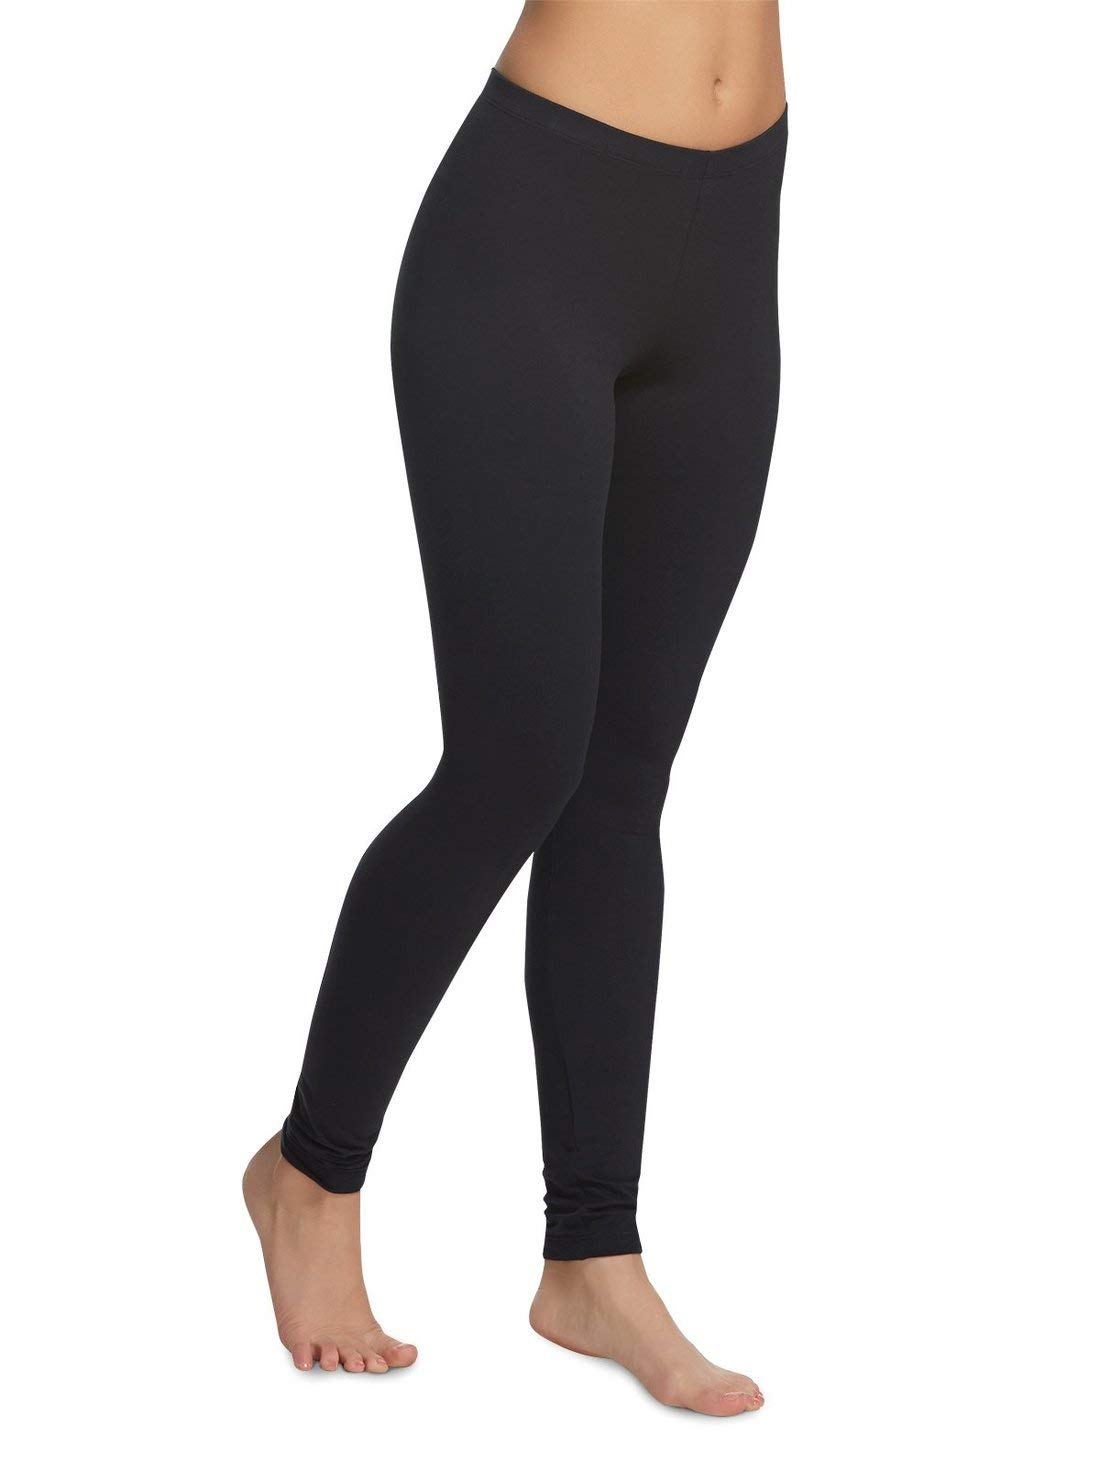 Felina Velvety Super Soft Lightweight Style 2801 Leggings - for Women - Yoga Pants, Workout Clothes